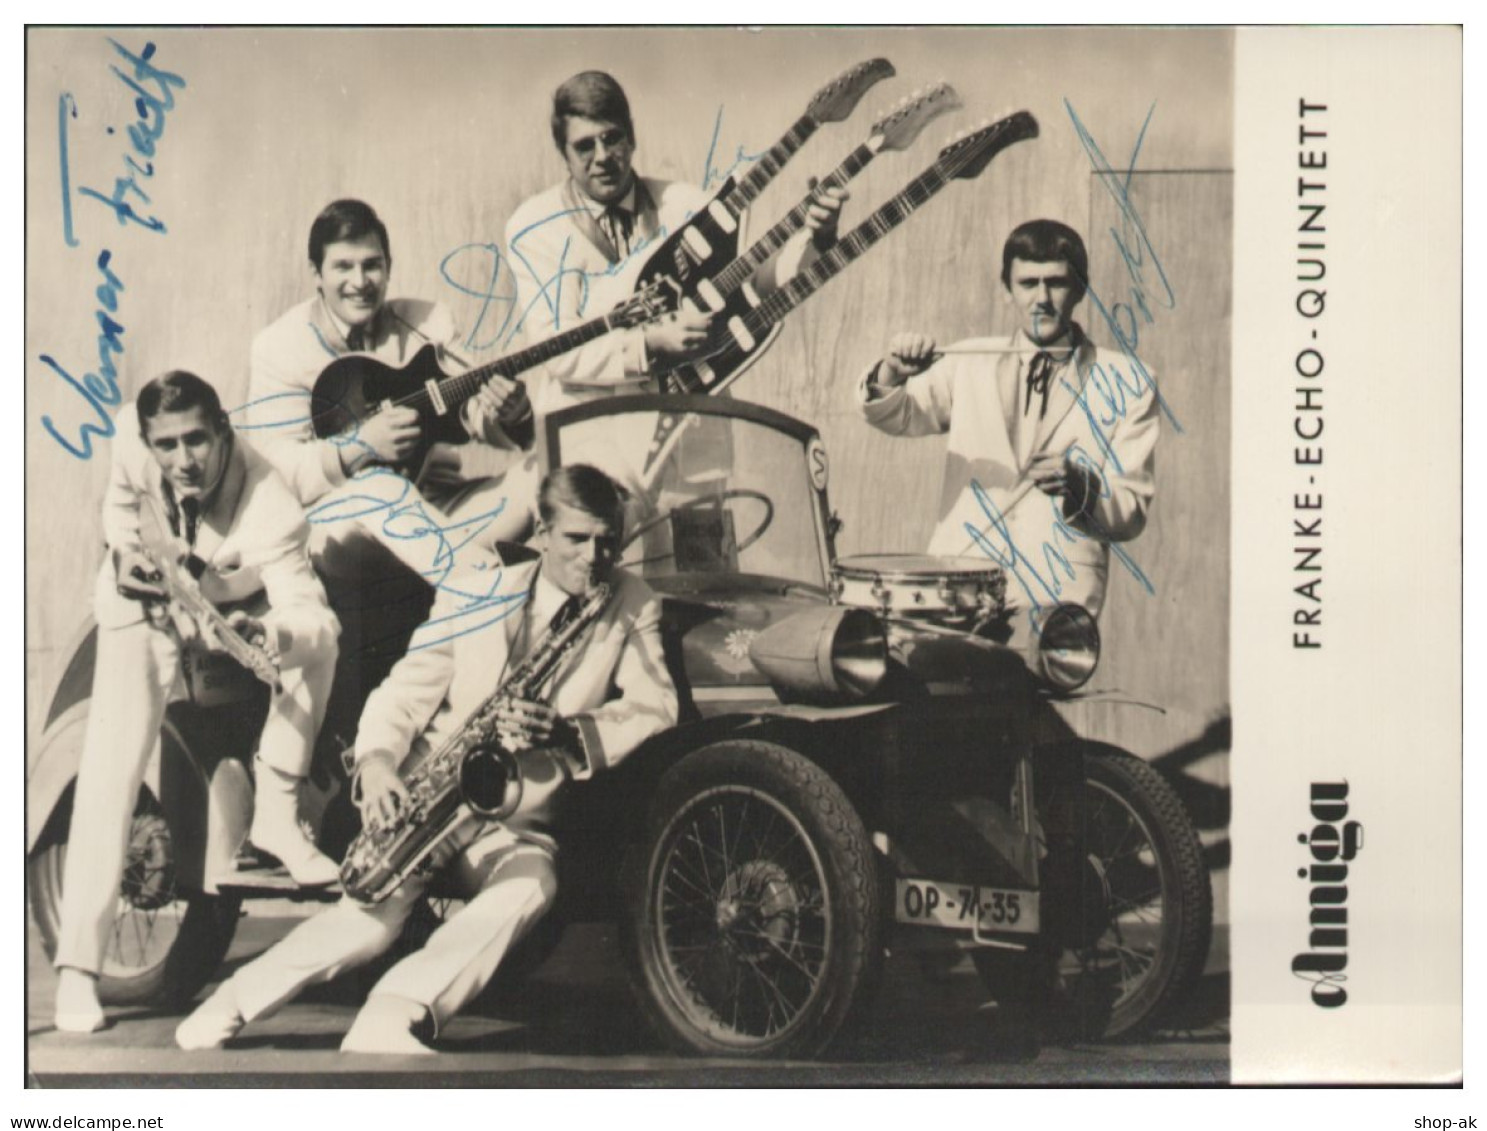 Y28851/ Franke-Echo-Quintett Beat- Popgruppe Autogramme  Autogrammkarte 60er  - Handtekening